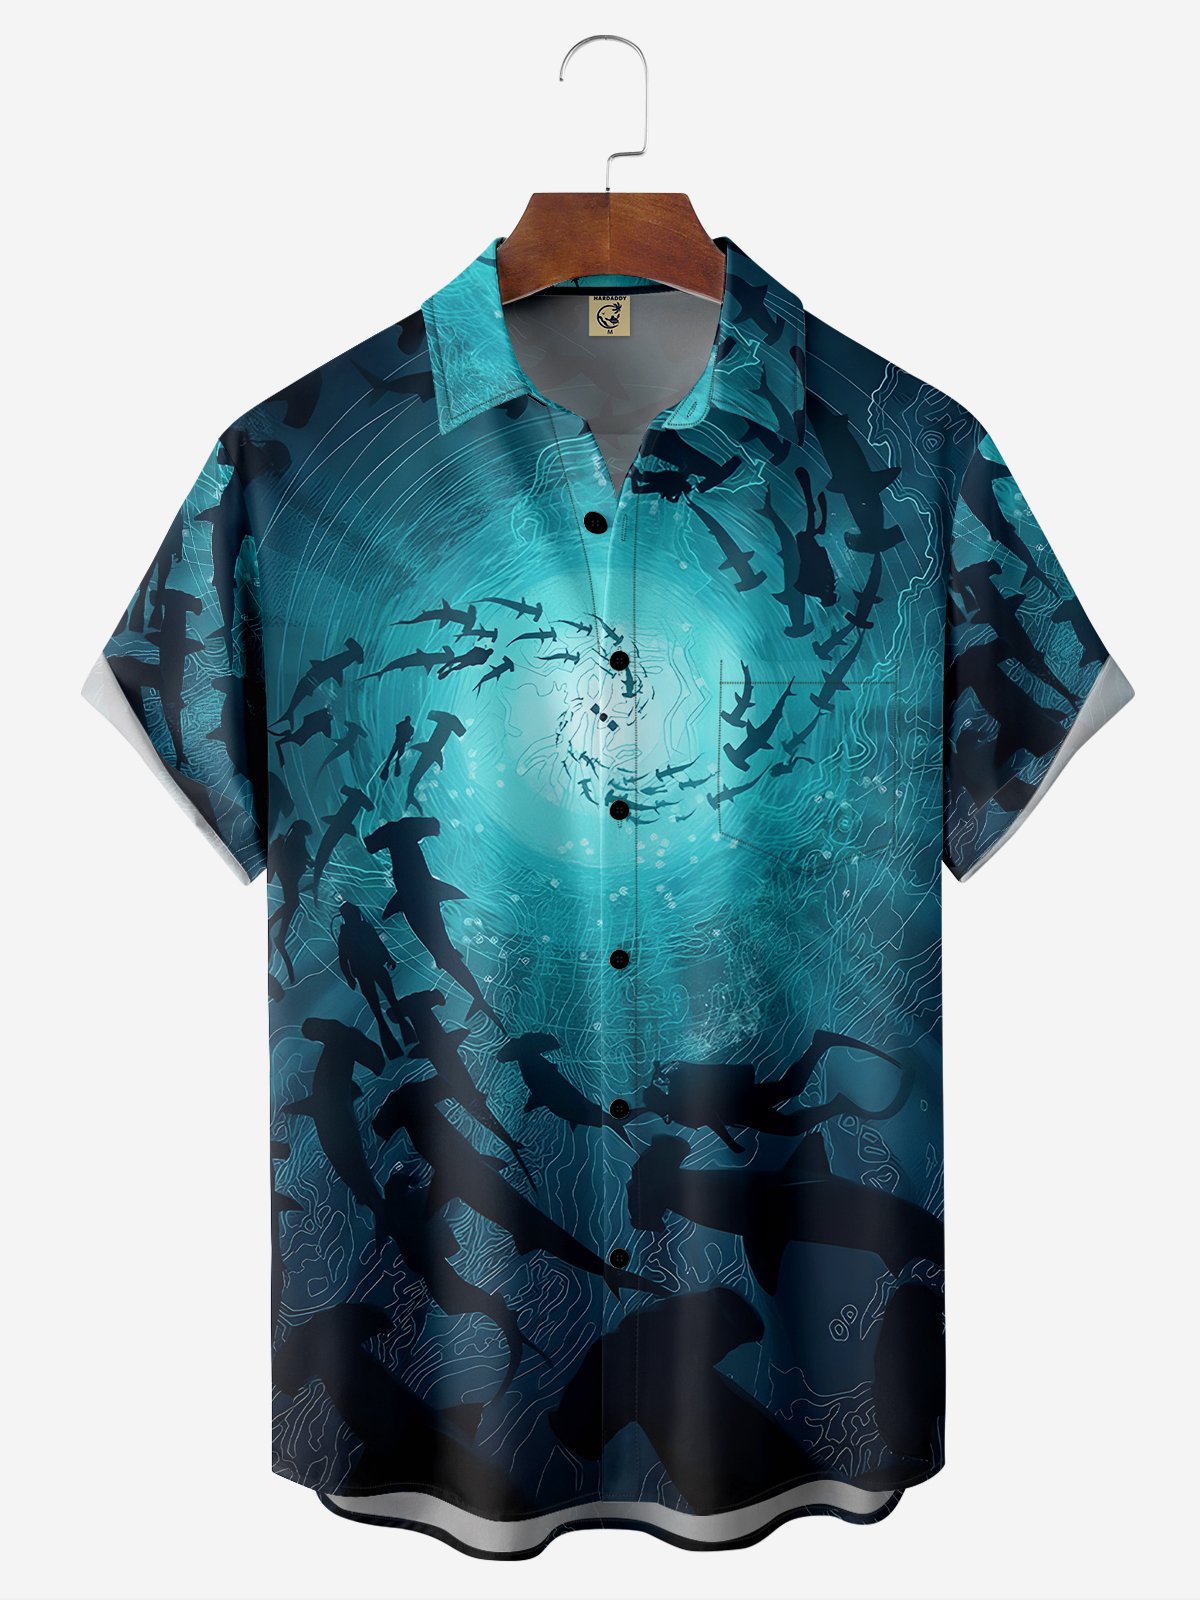 Hardaddy Moisture-wicking Marine Animal Chest Pocket Hawaiian Shirt